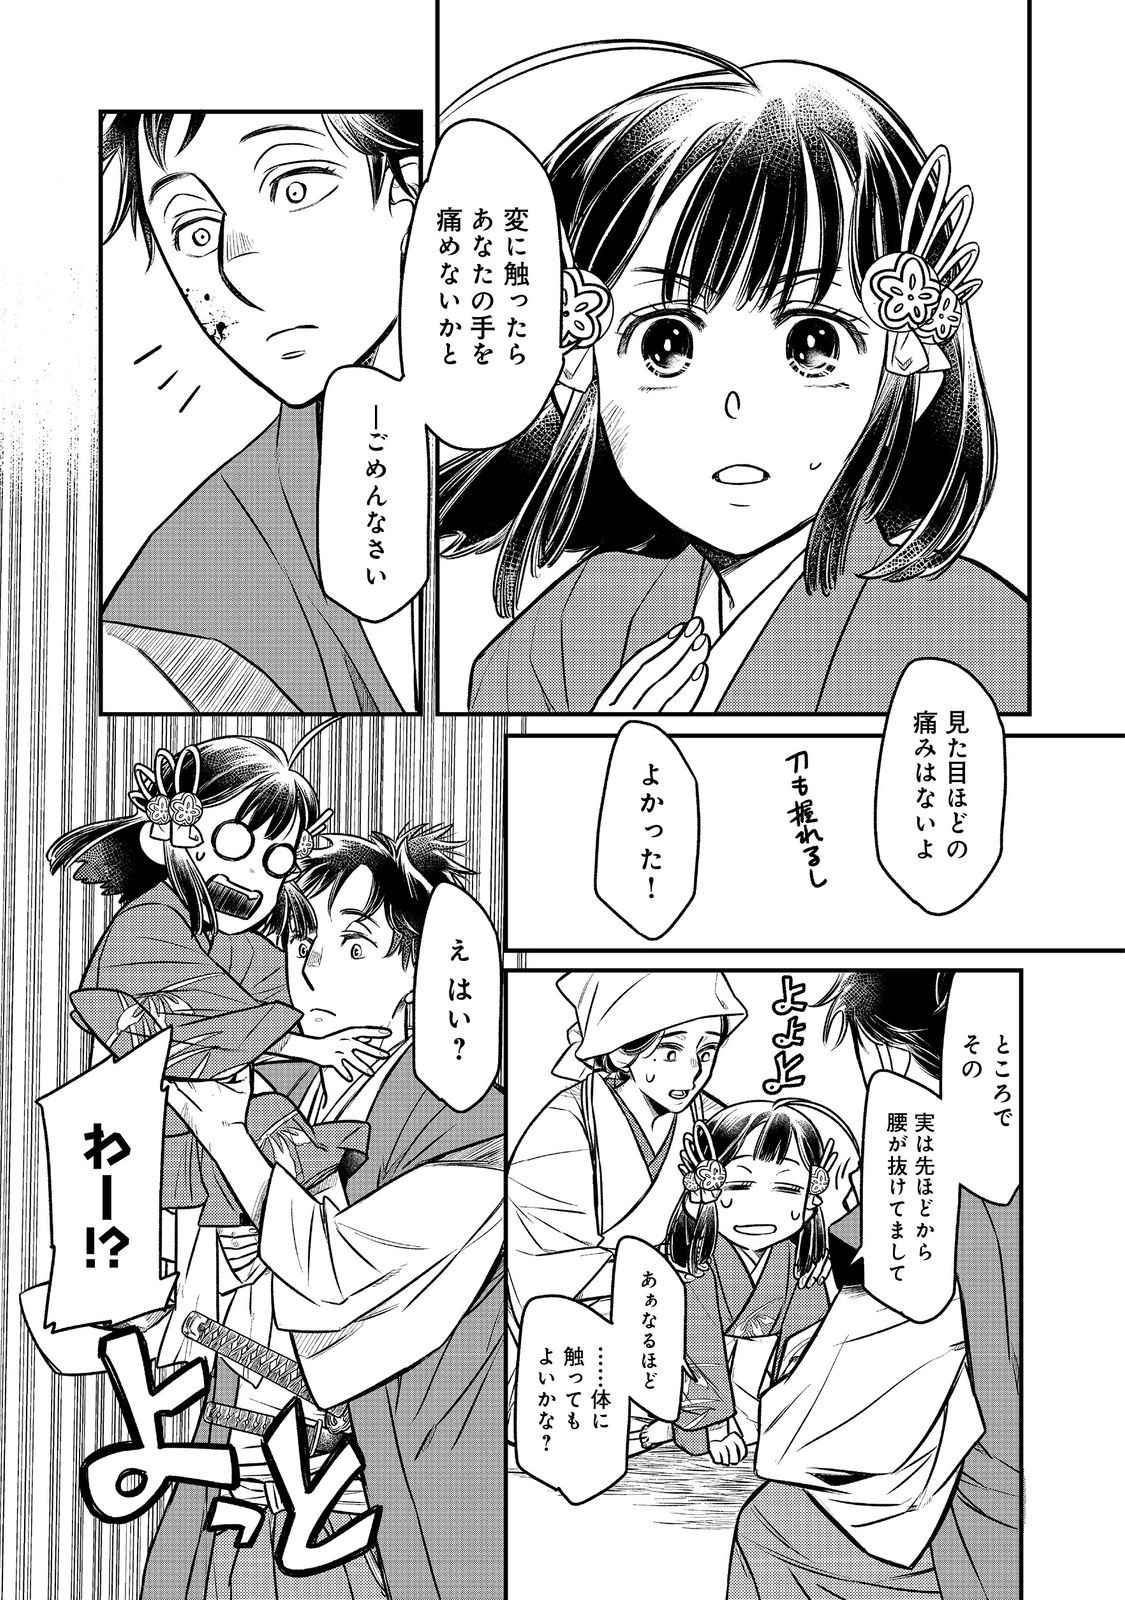 Kitanomandokoro-sama no Okeshougakari - Chapter 6.1 - Page 11